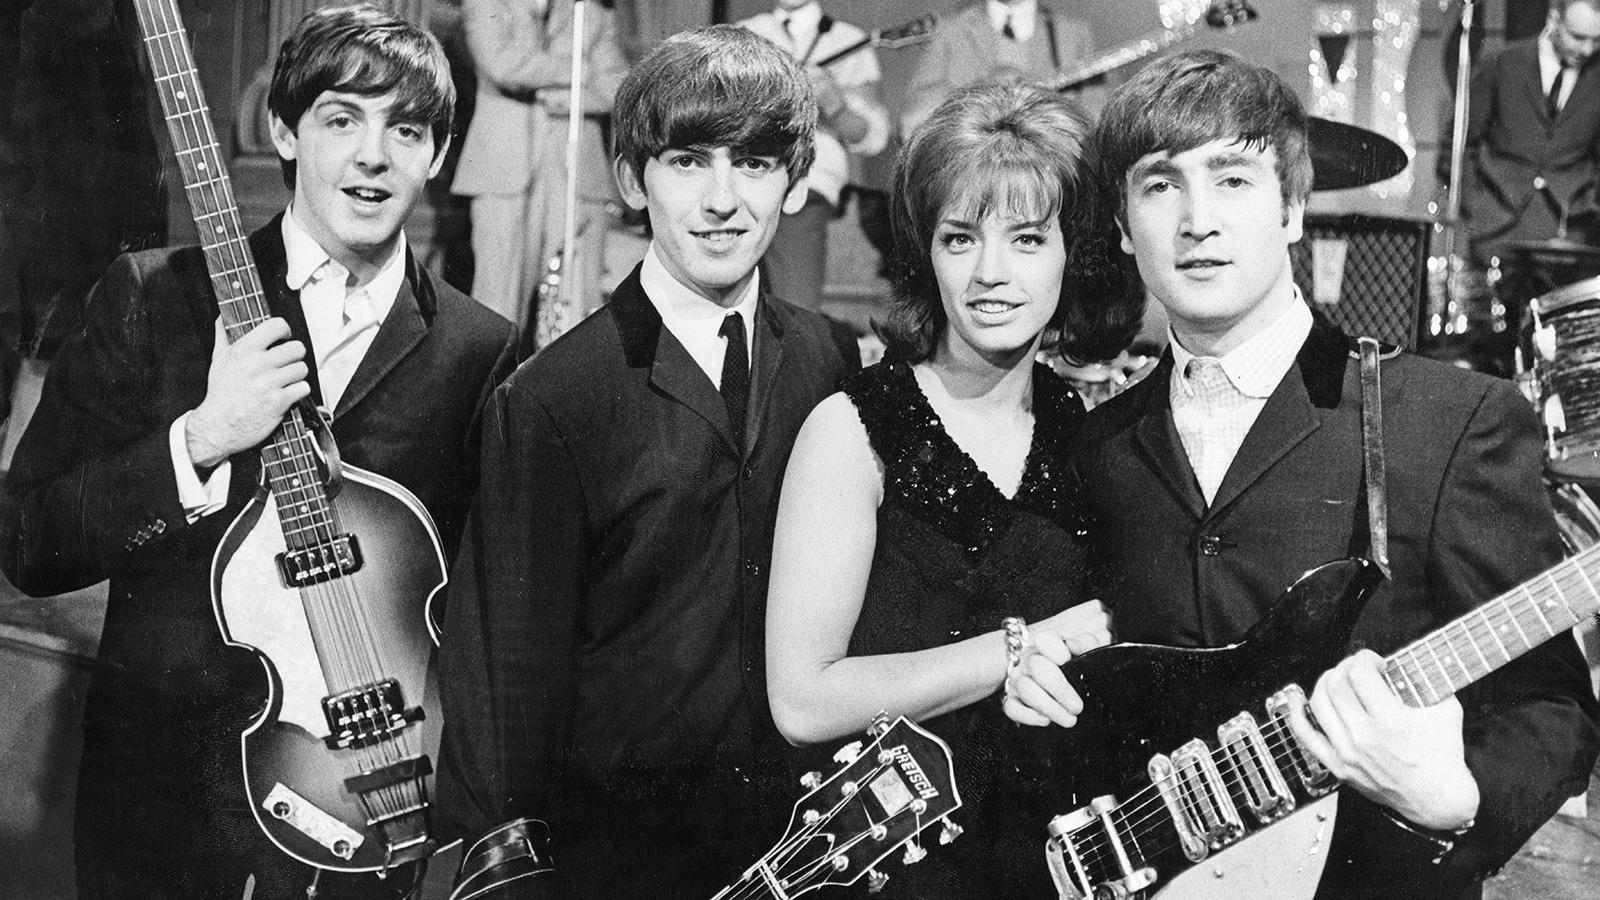 Lill-Babs med Beatles i tv-programmet ”Drop in” 1963.